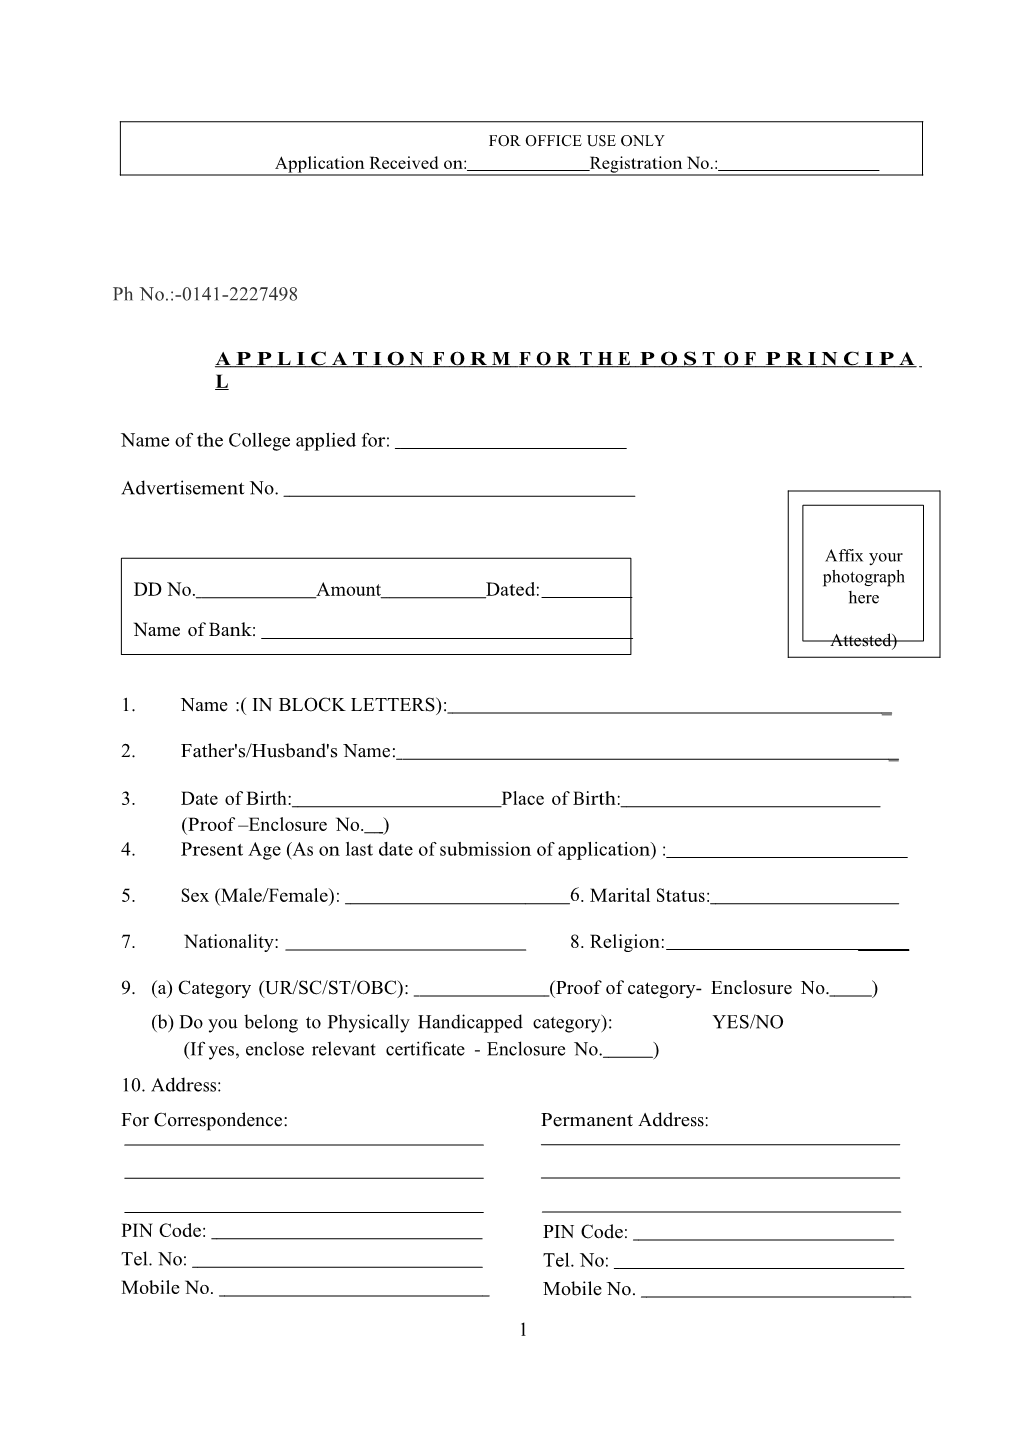 Application Form Principal Final 21.11.2011